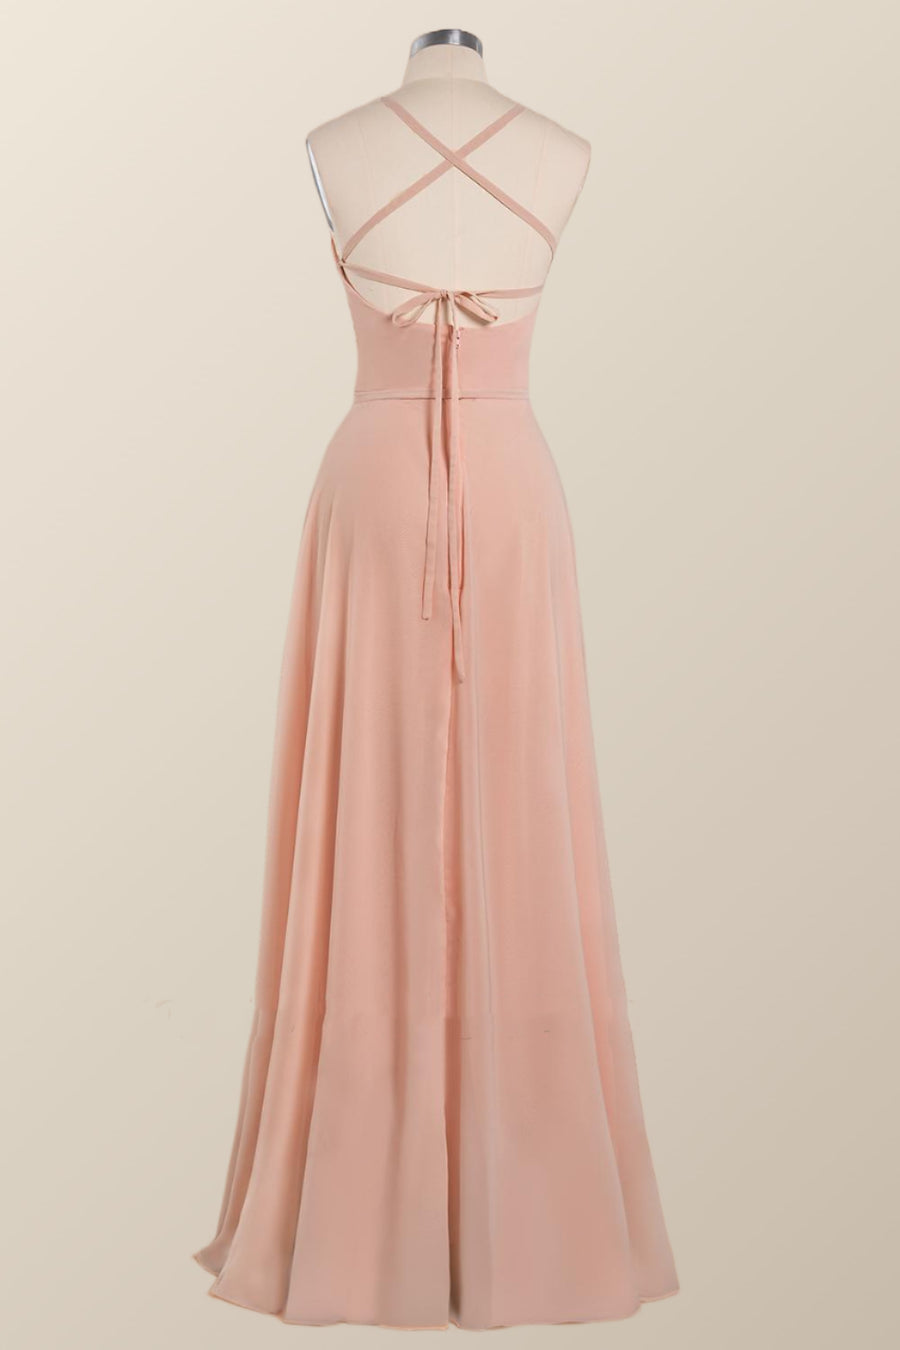 Princess Pink Straps Chiffon A-line Long Bridesmaid Dress